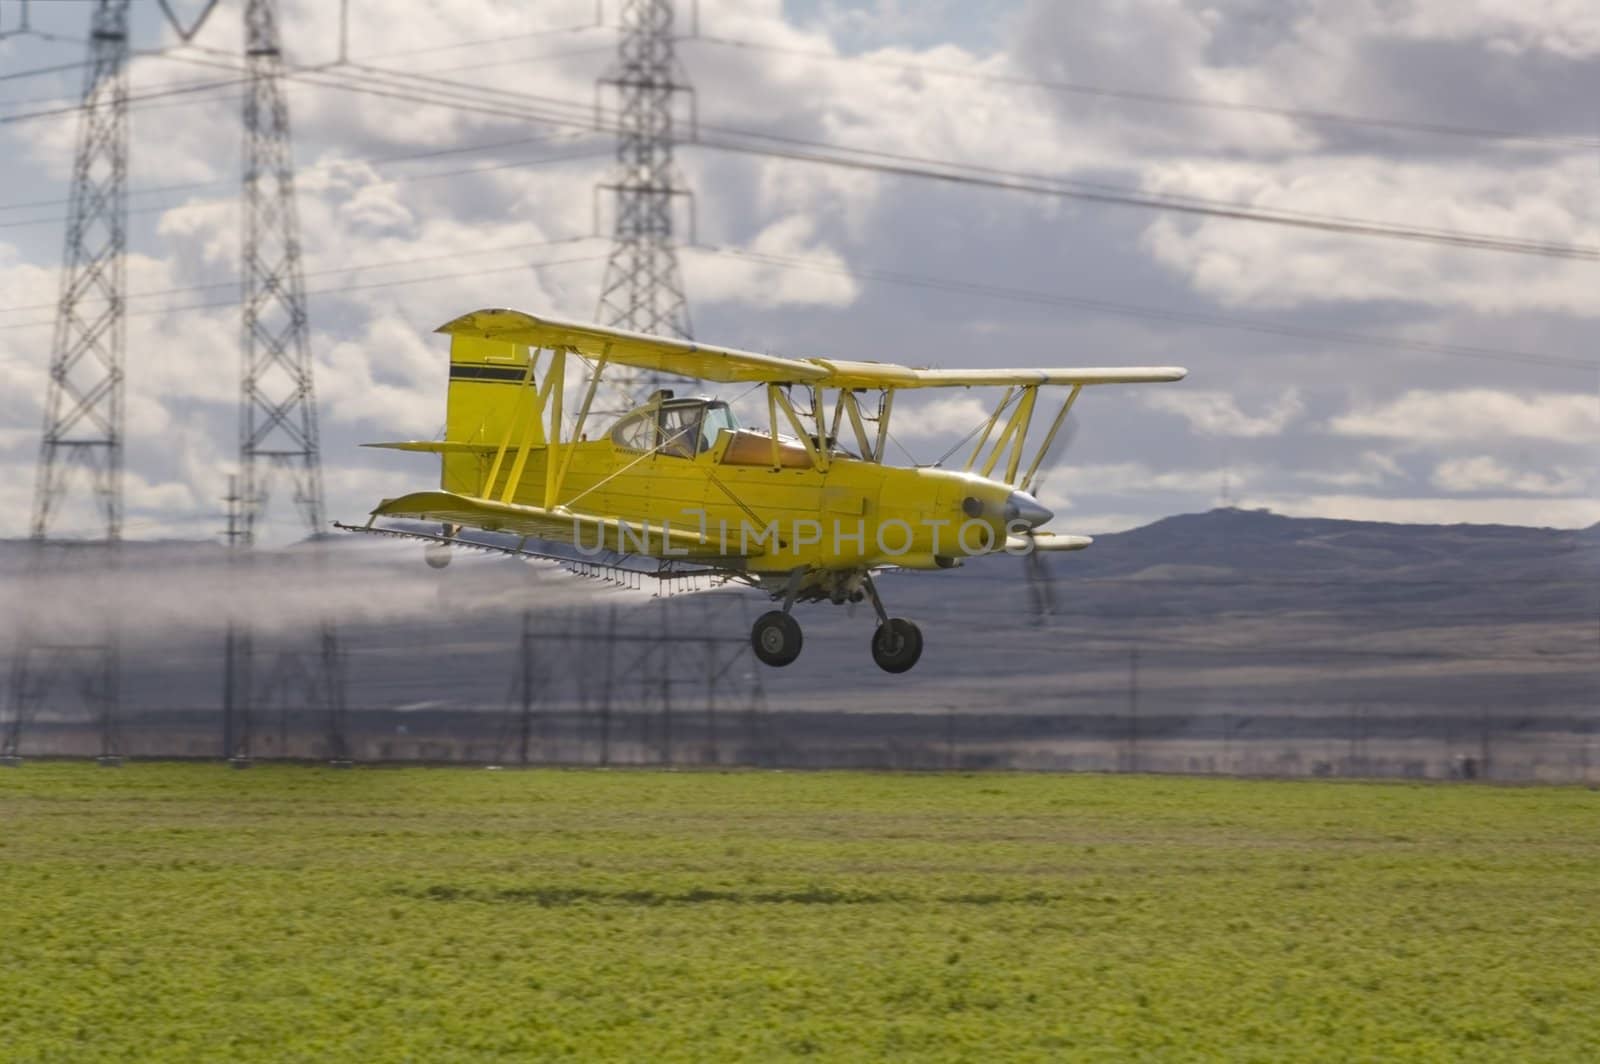 Low flying crop spraying aircraft